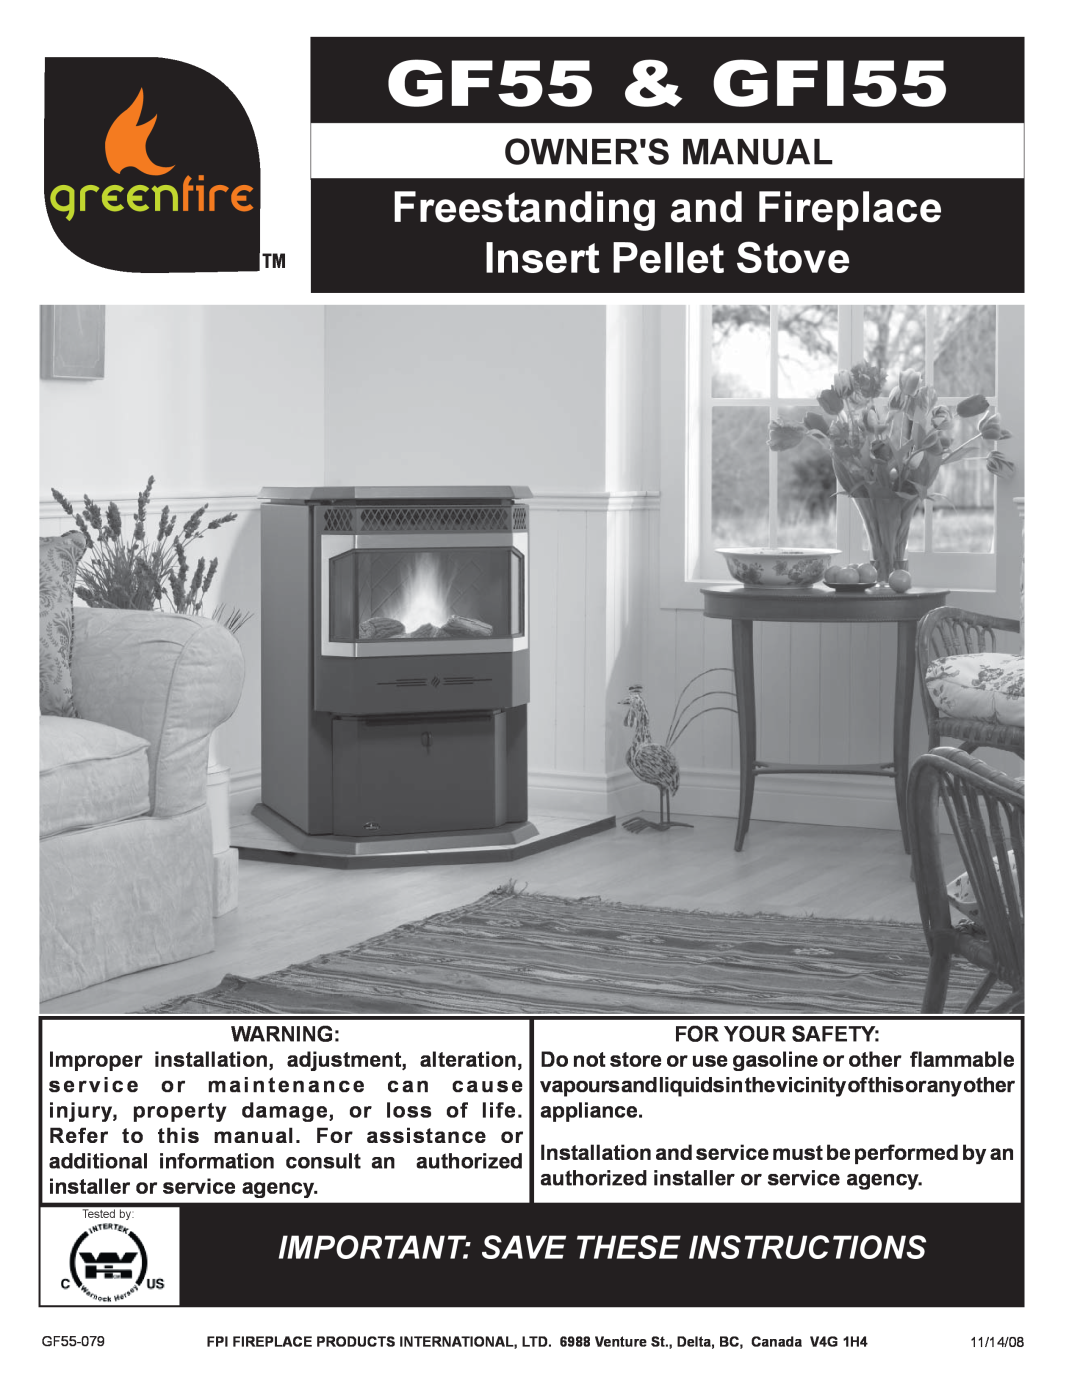 Regency owner manual GF55 & GFI55, Freestanding and Fireplace Insert Pellet Stove, Owners Manual 